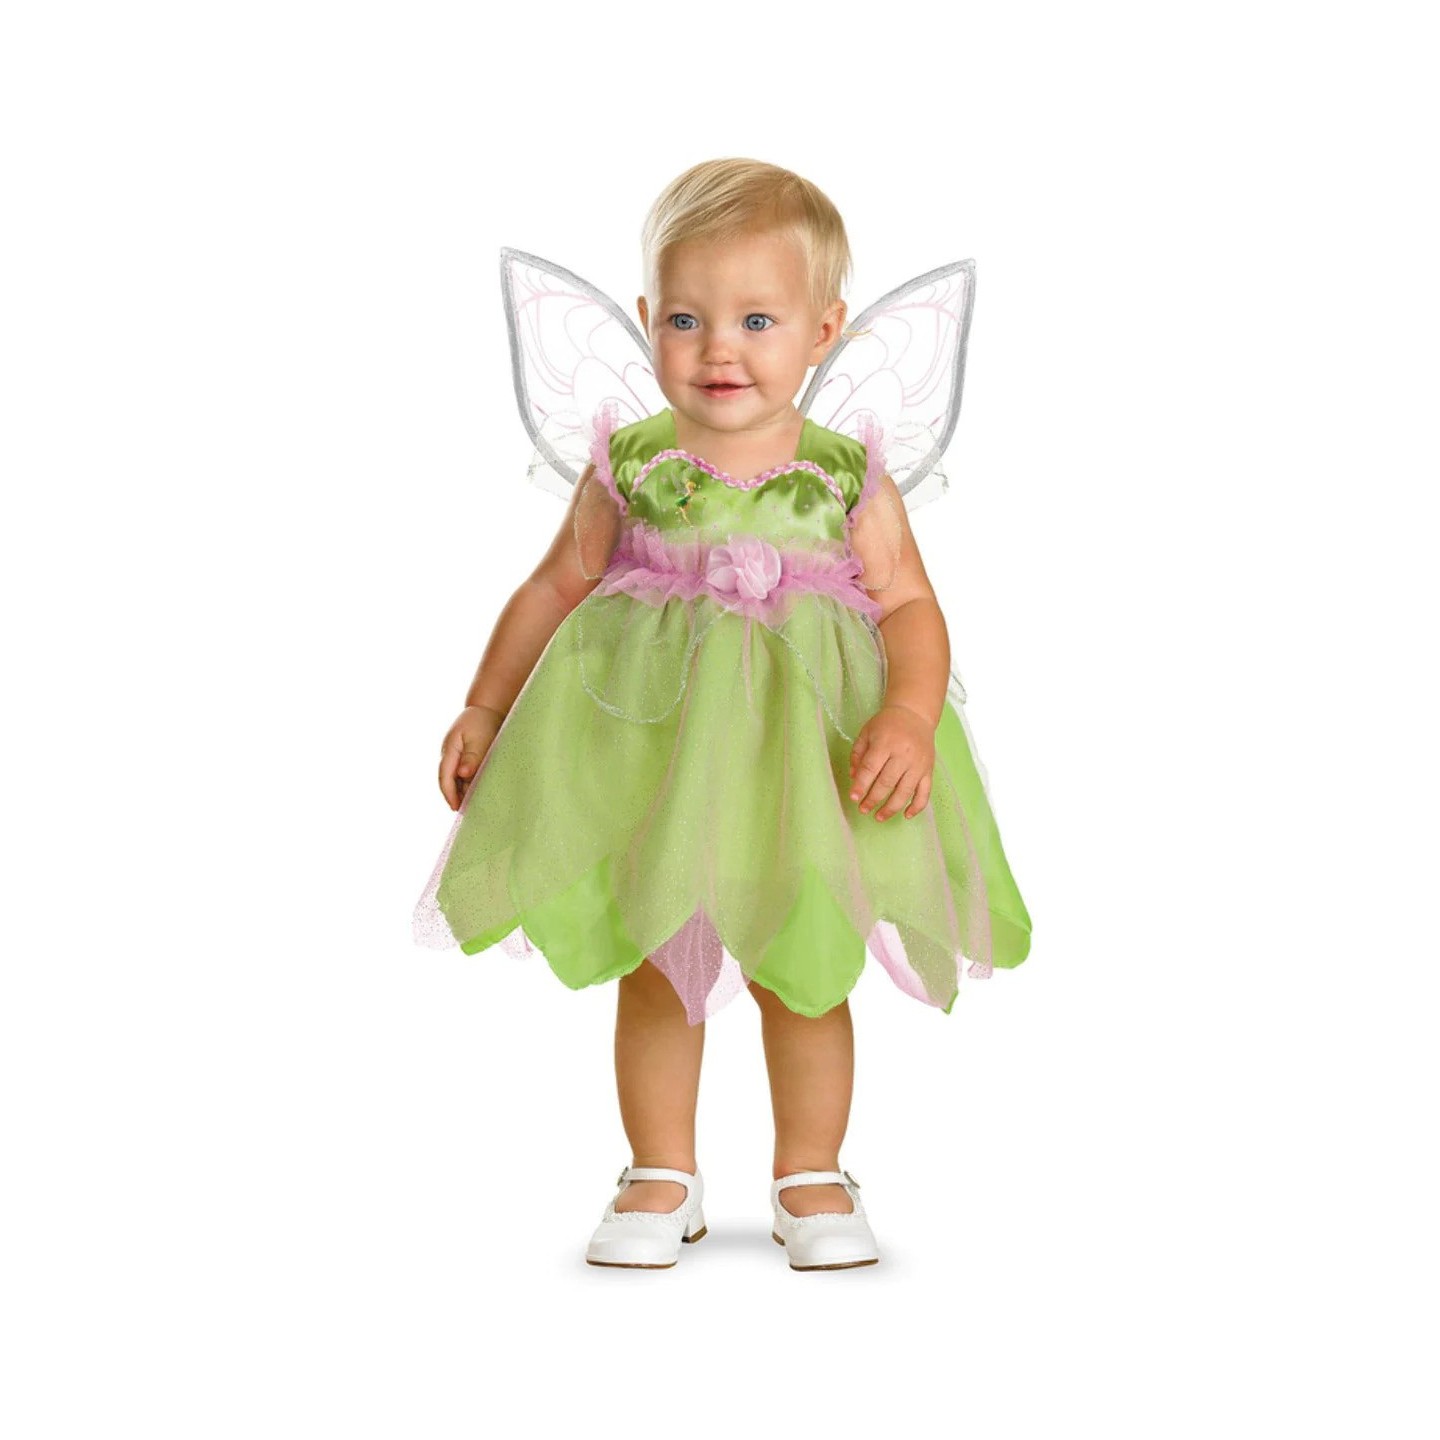 kofferbak vertegenwoordiger Plons Tinkerbell jurkje baby | Jokershop.be - Disney verkleedkleding